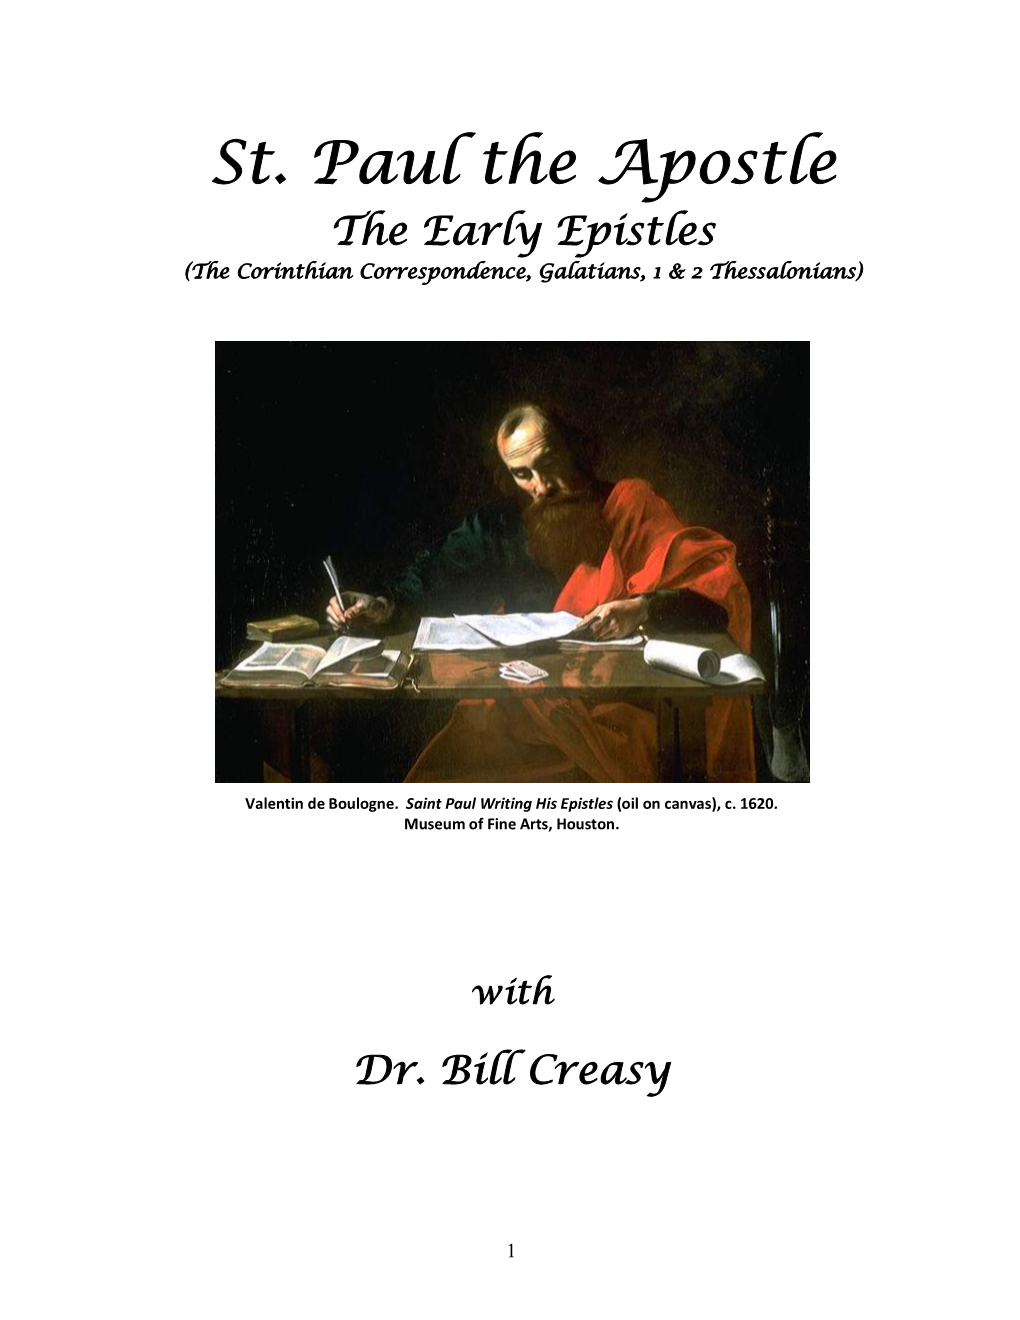 St. Paul's Early Epistles Syllabus